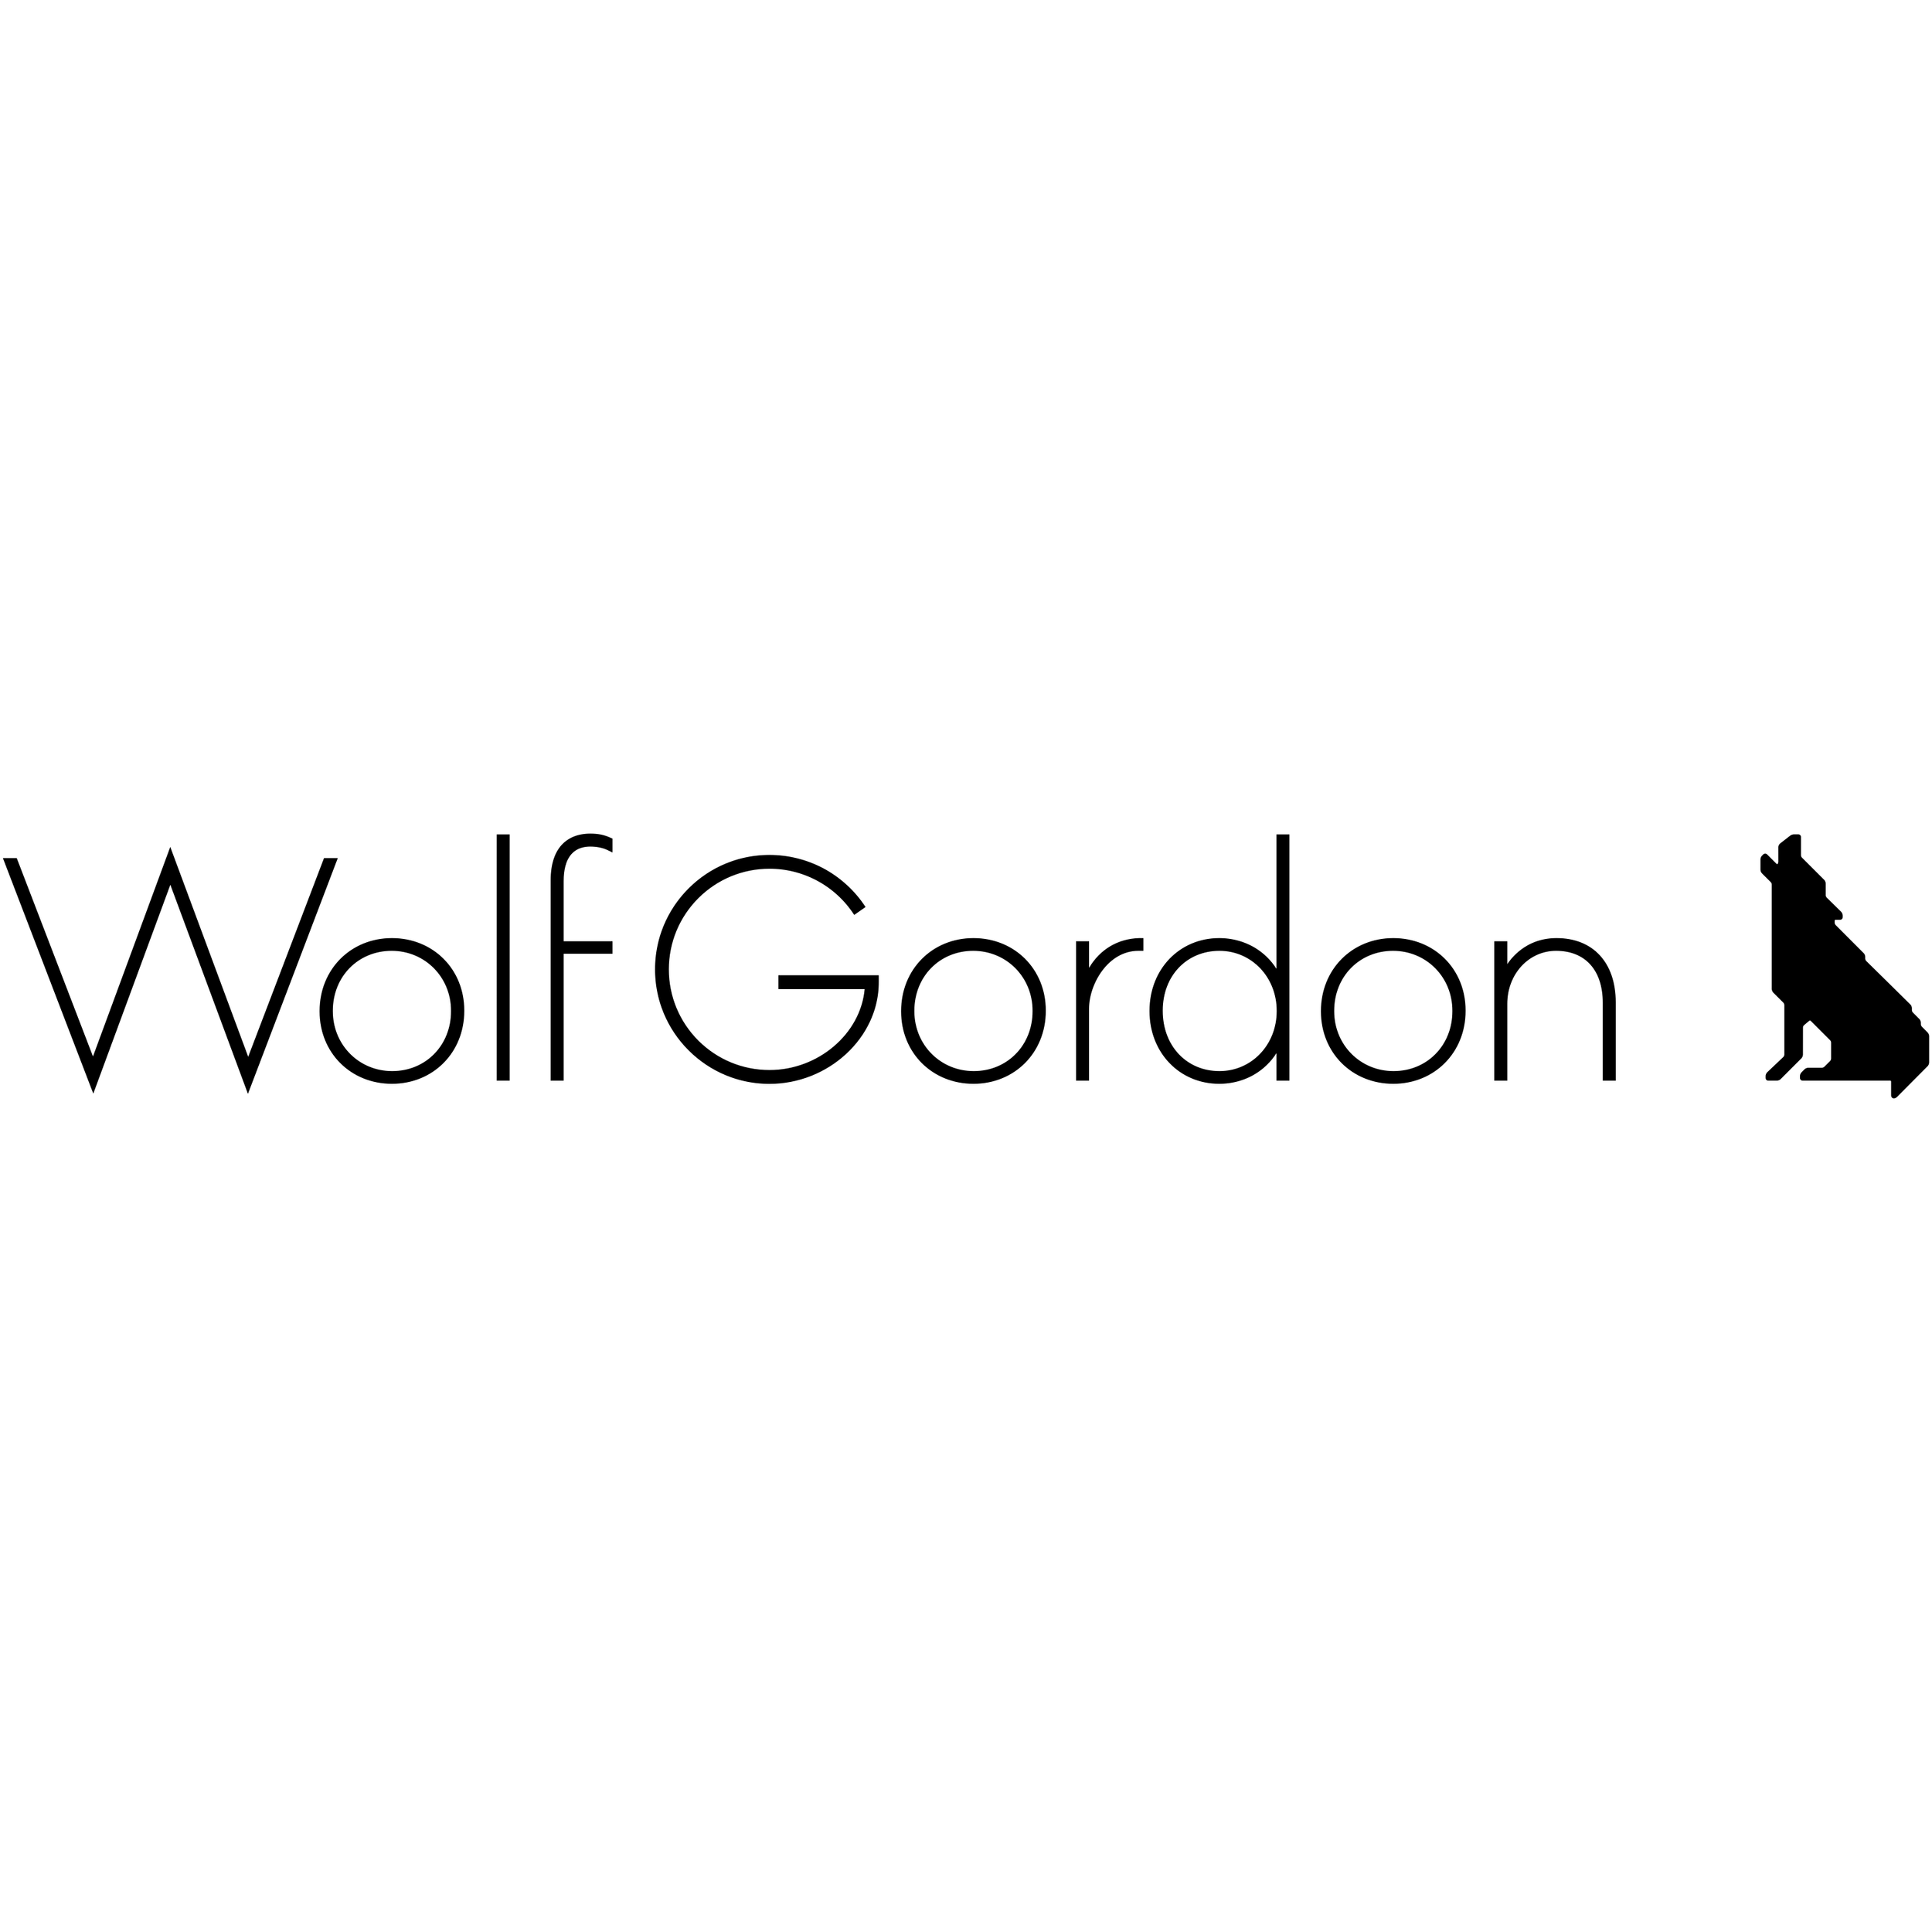 SILVER - Wolf Gordon.png